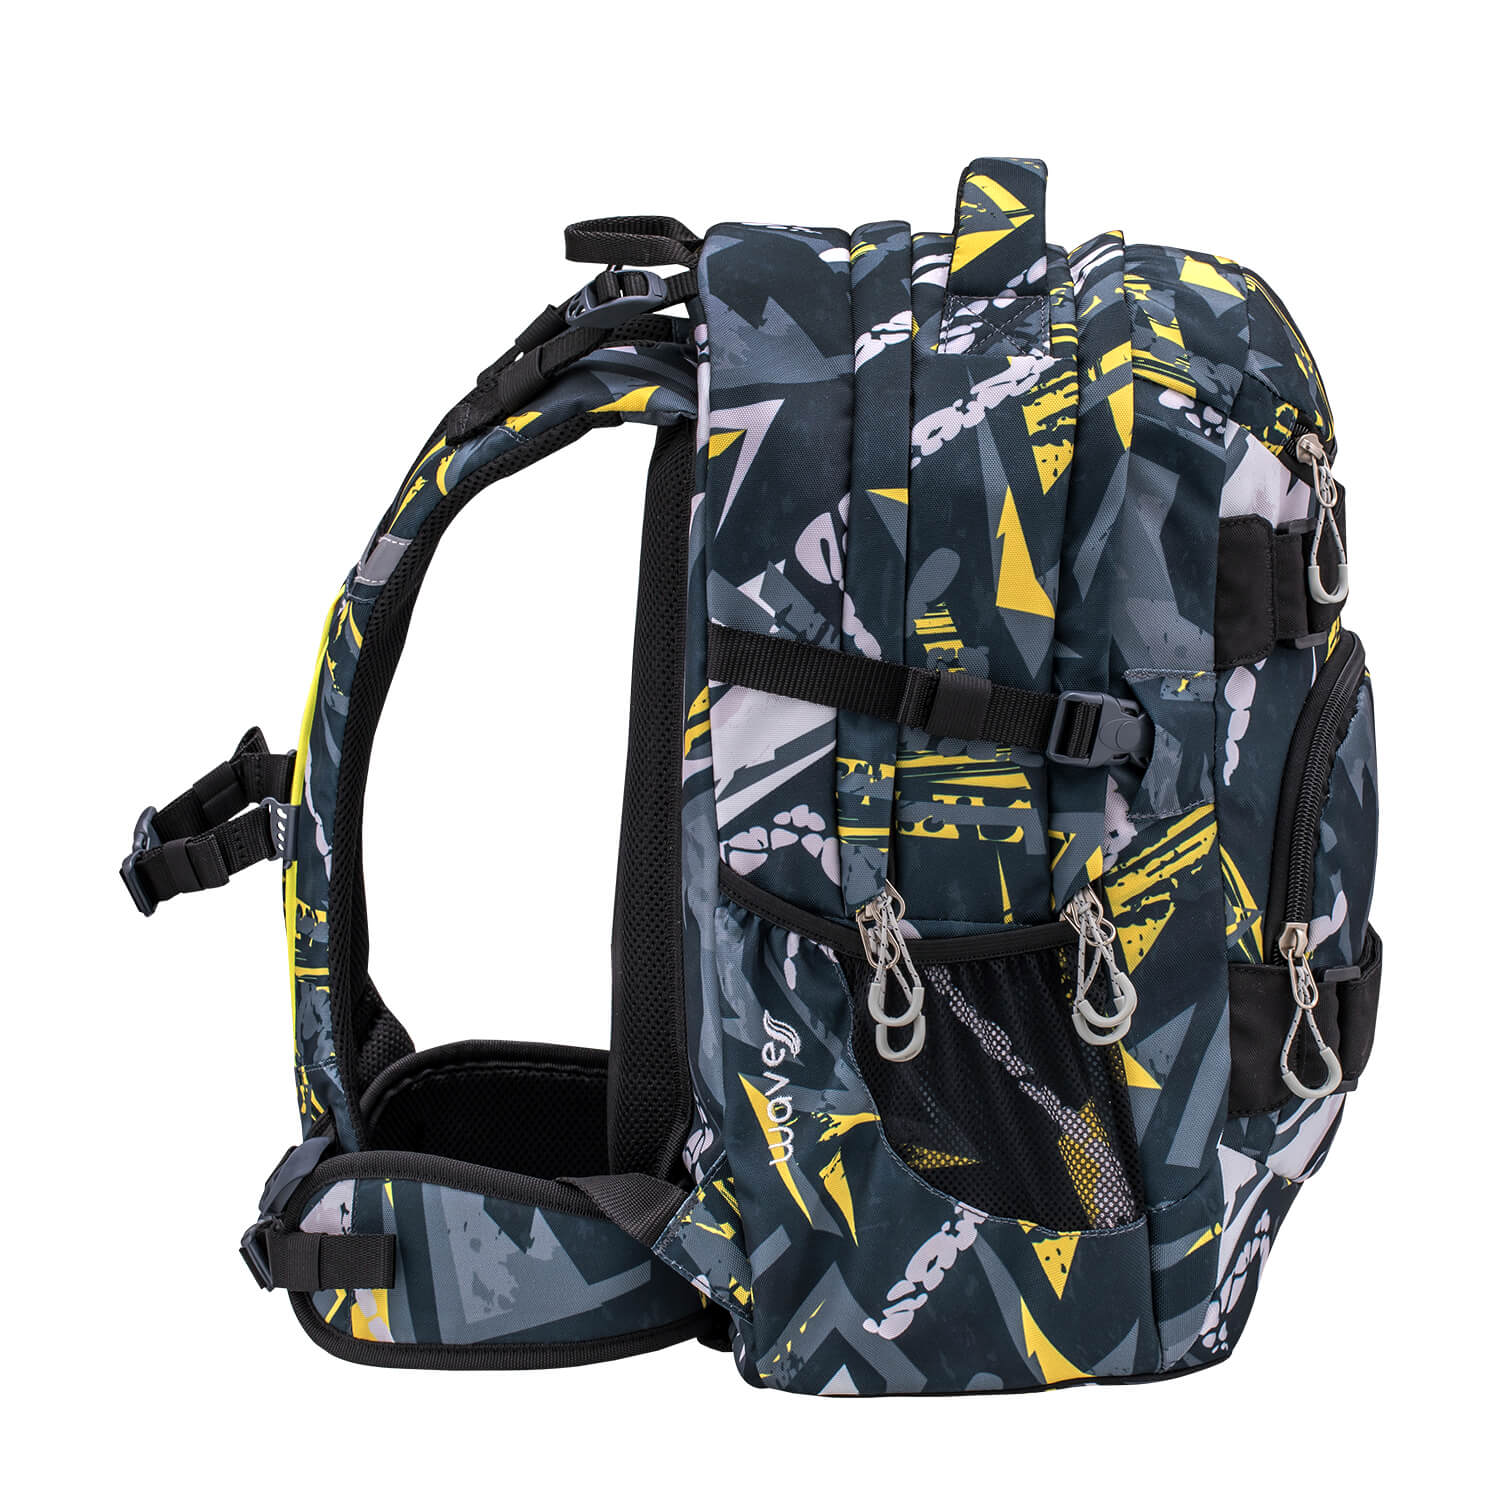 Wave Infinity Yellow Graffiti school backpack Set 3 Pcs